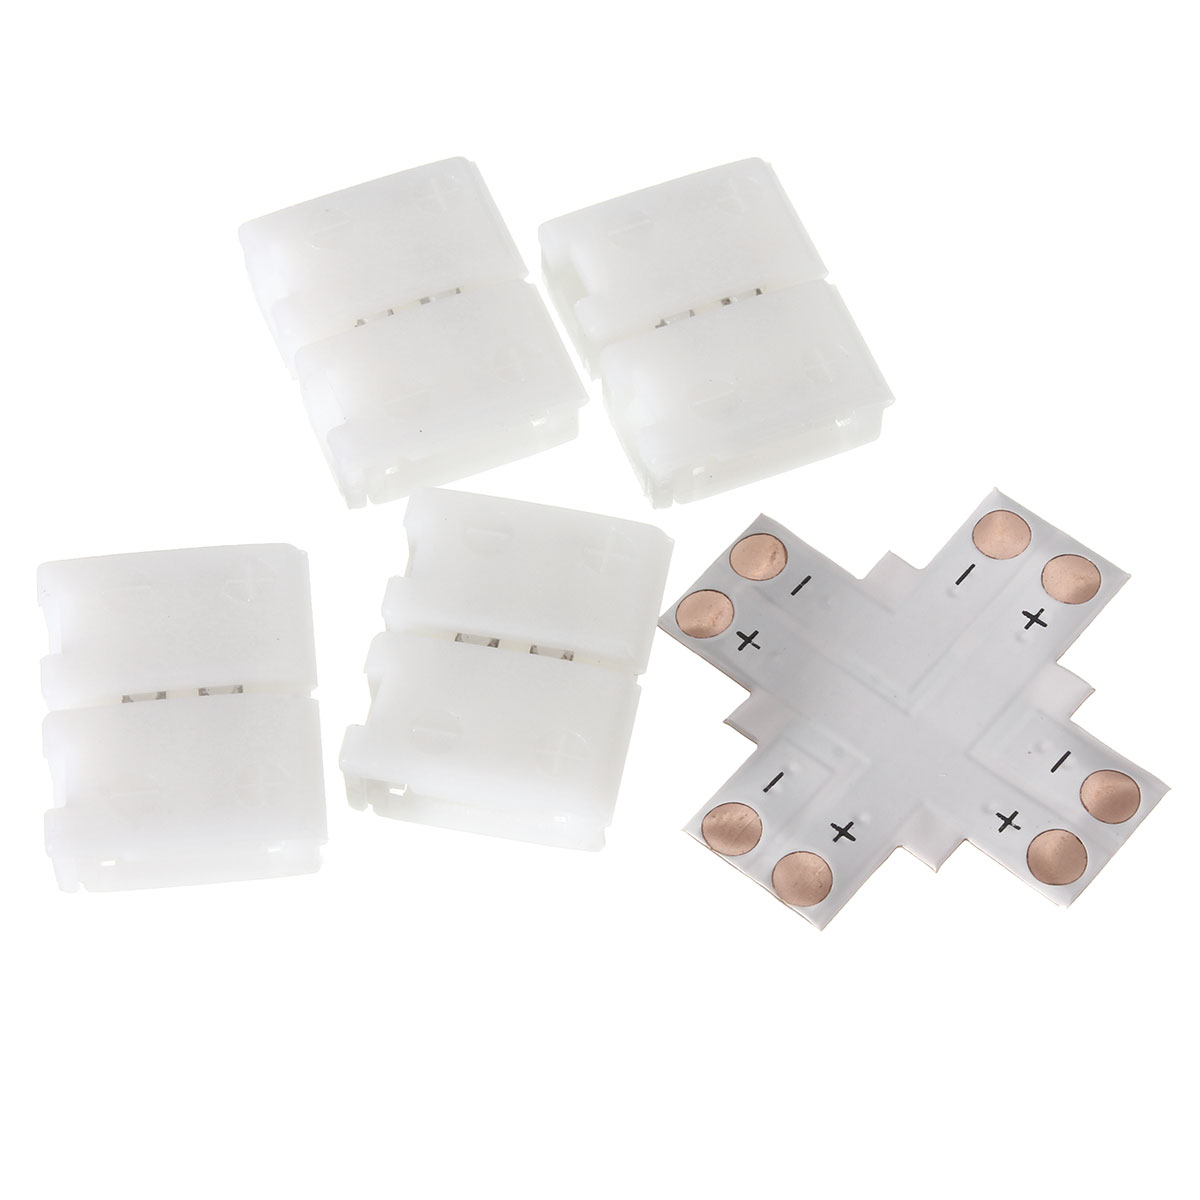 10mm-TL-Shape-2-Pin-5050-PCB-LED-Strip-Corner-Connector-for-Single-Color-Lighting-1087475-3